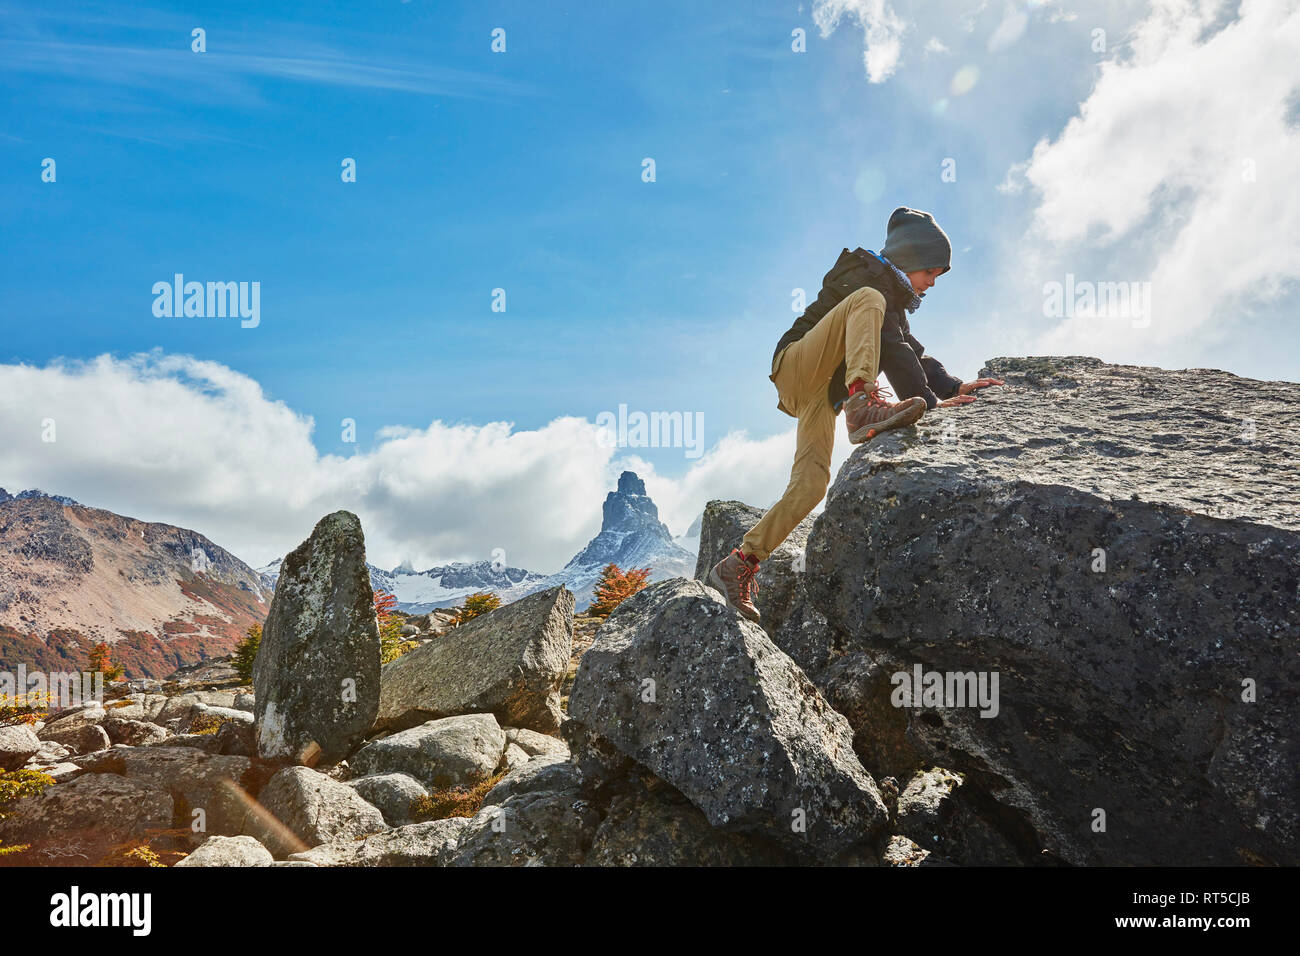 Le Chili, Cerro Castillo, garçon d'escalade sur rocher en mountainscape Banque D'Images